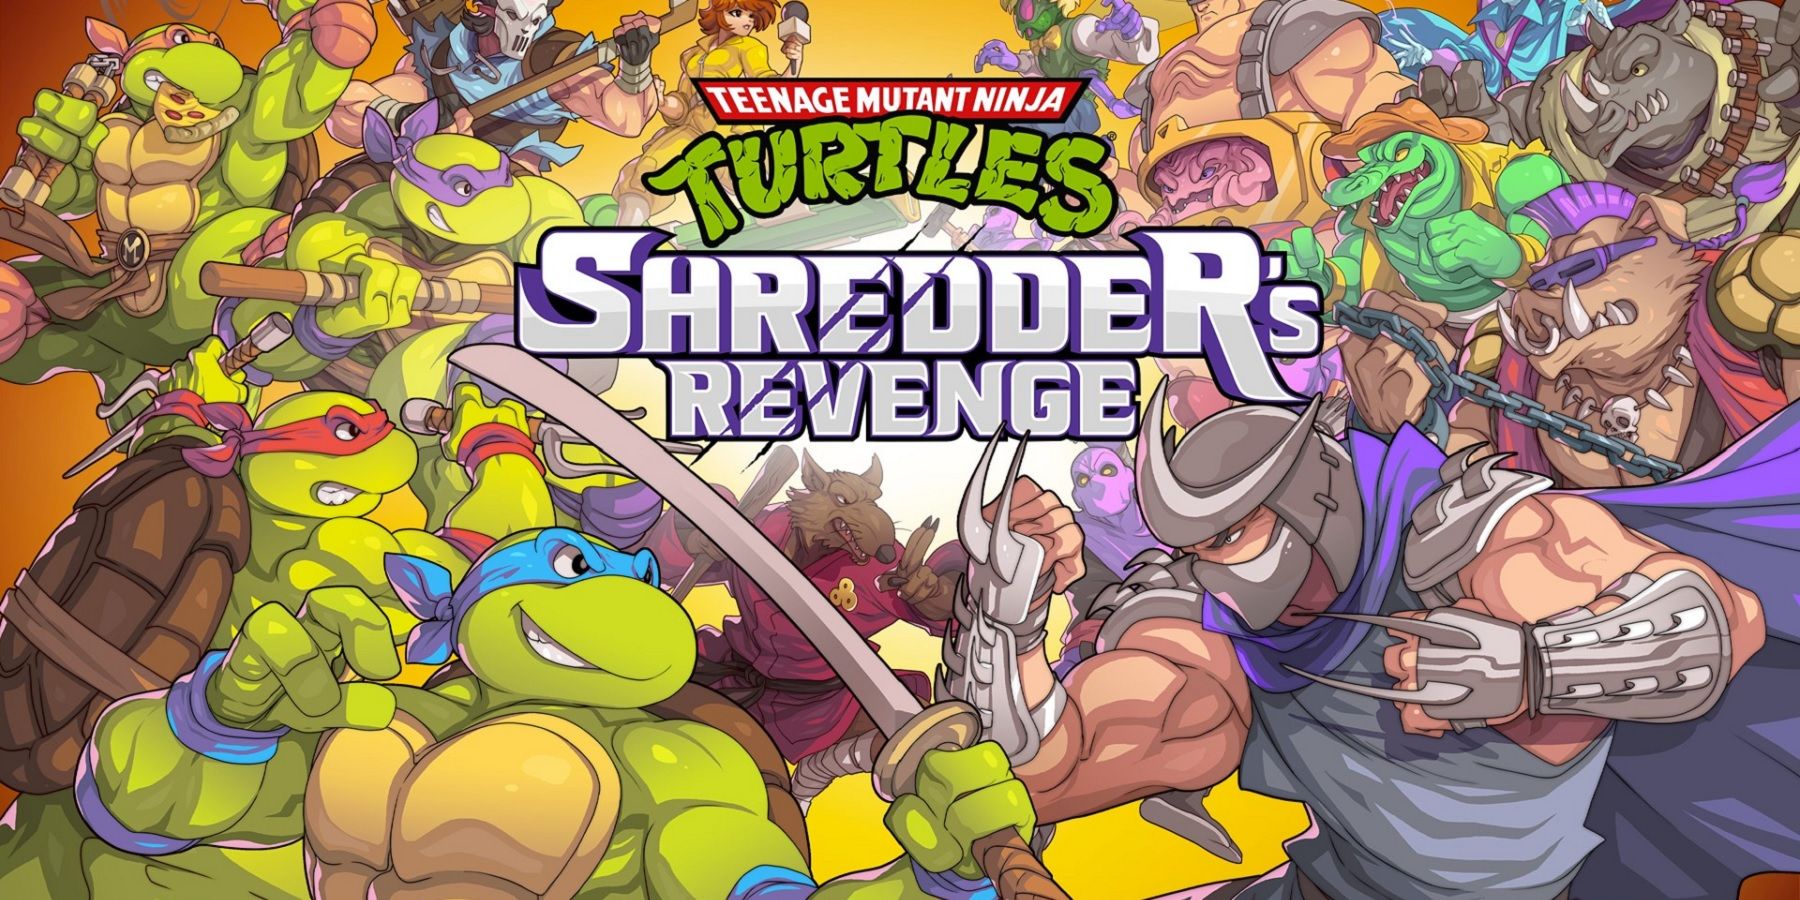 tmnt shredders revenge key art with myriad characters